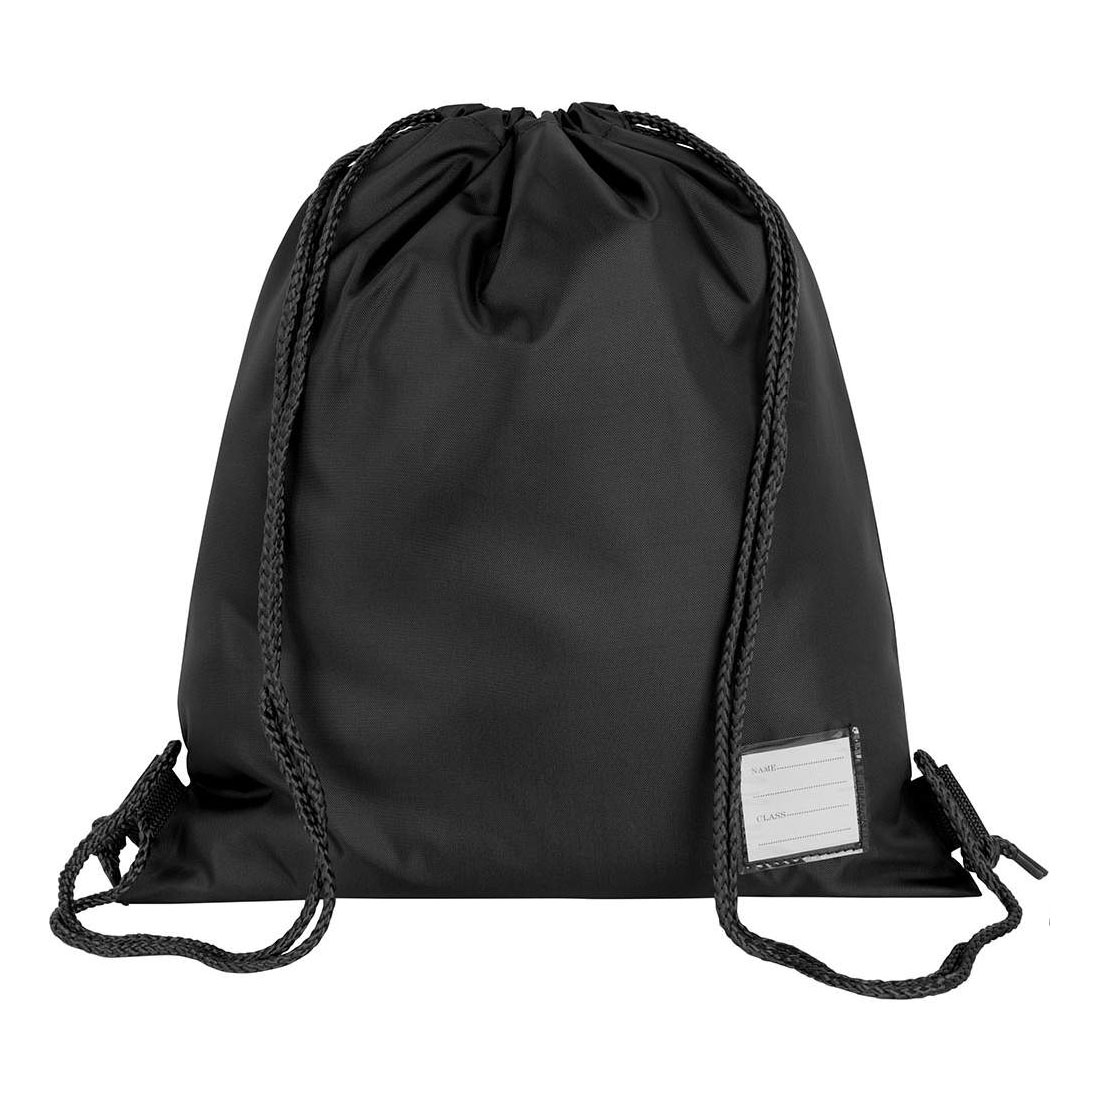 Bags » School Bags » School Bag :: Maswiz Ind